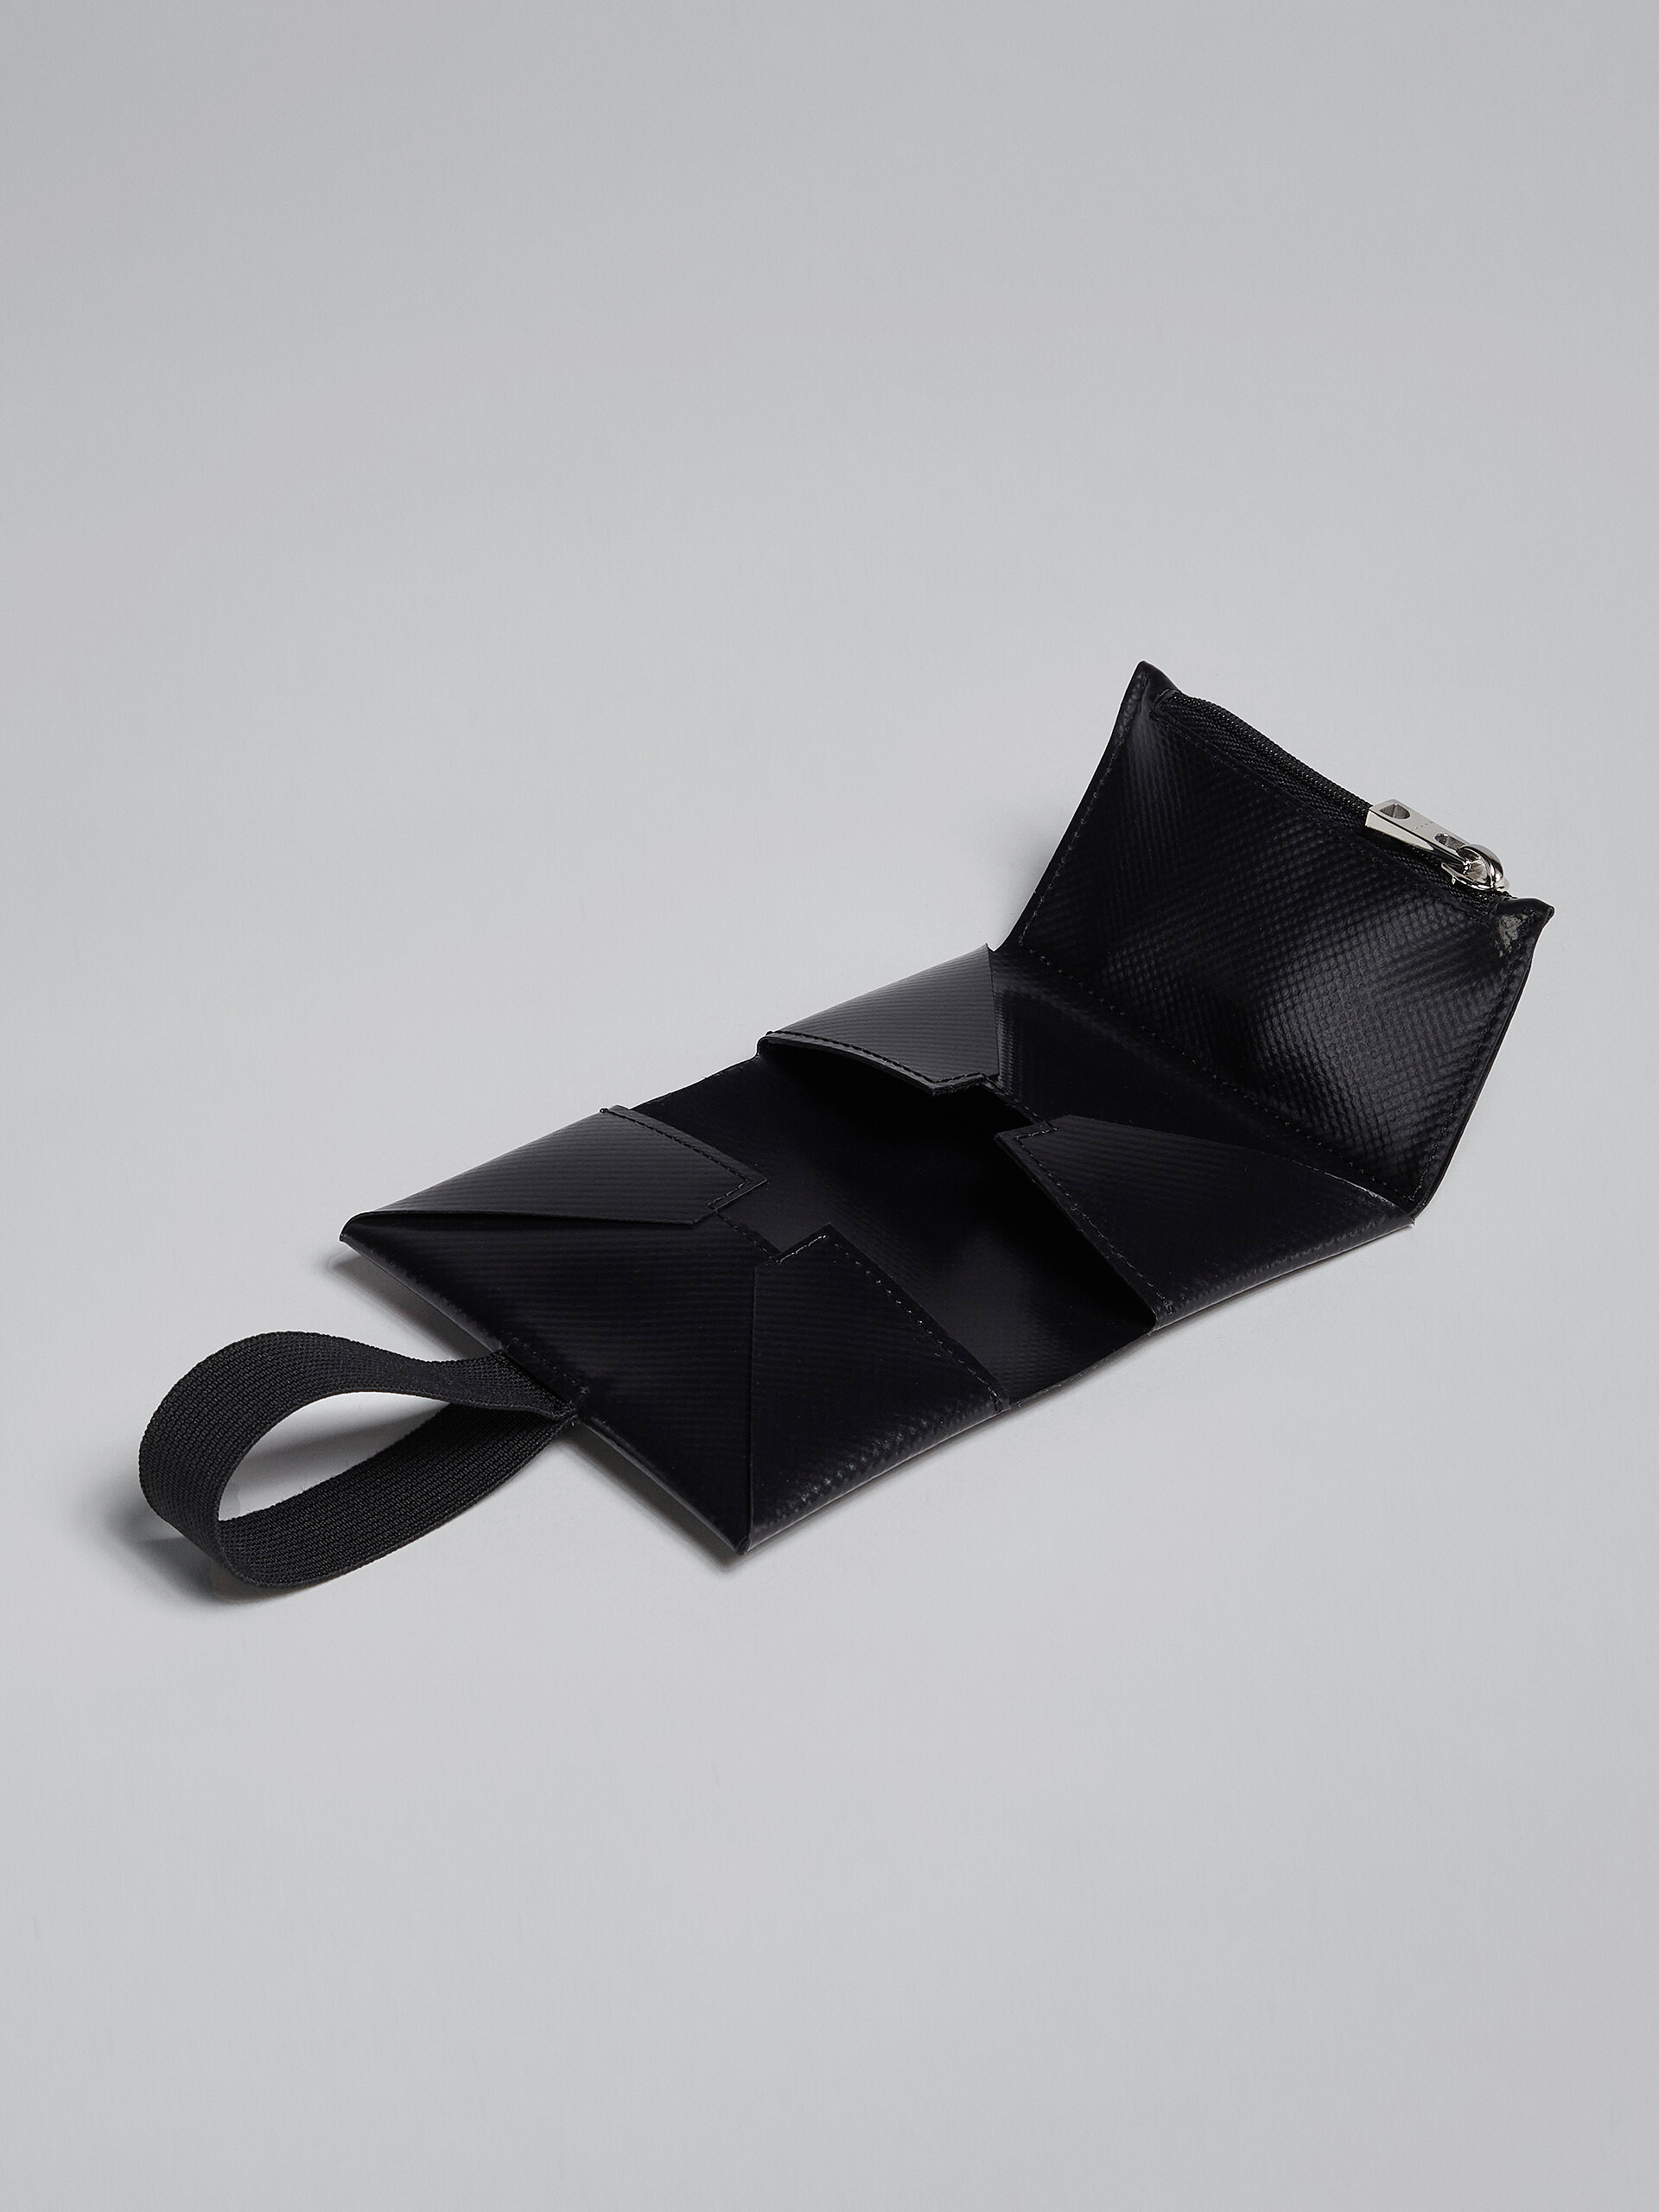 Portafoglio tri-fold nero - Portafogli - Image 5